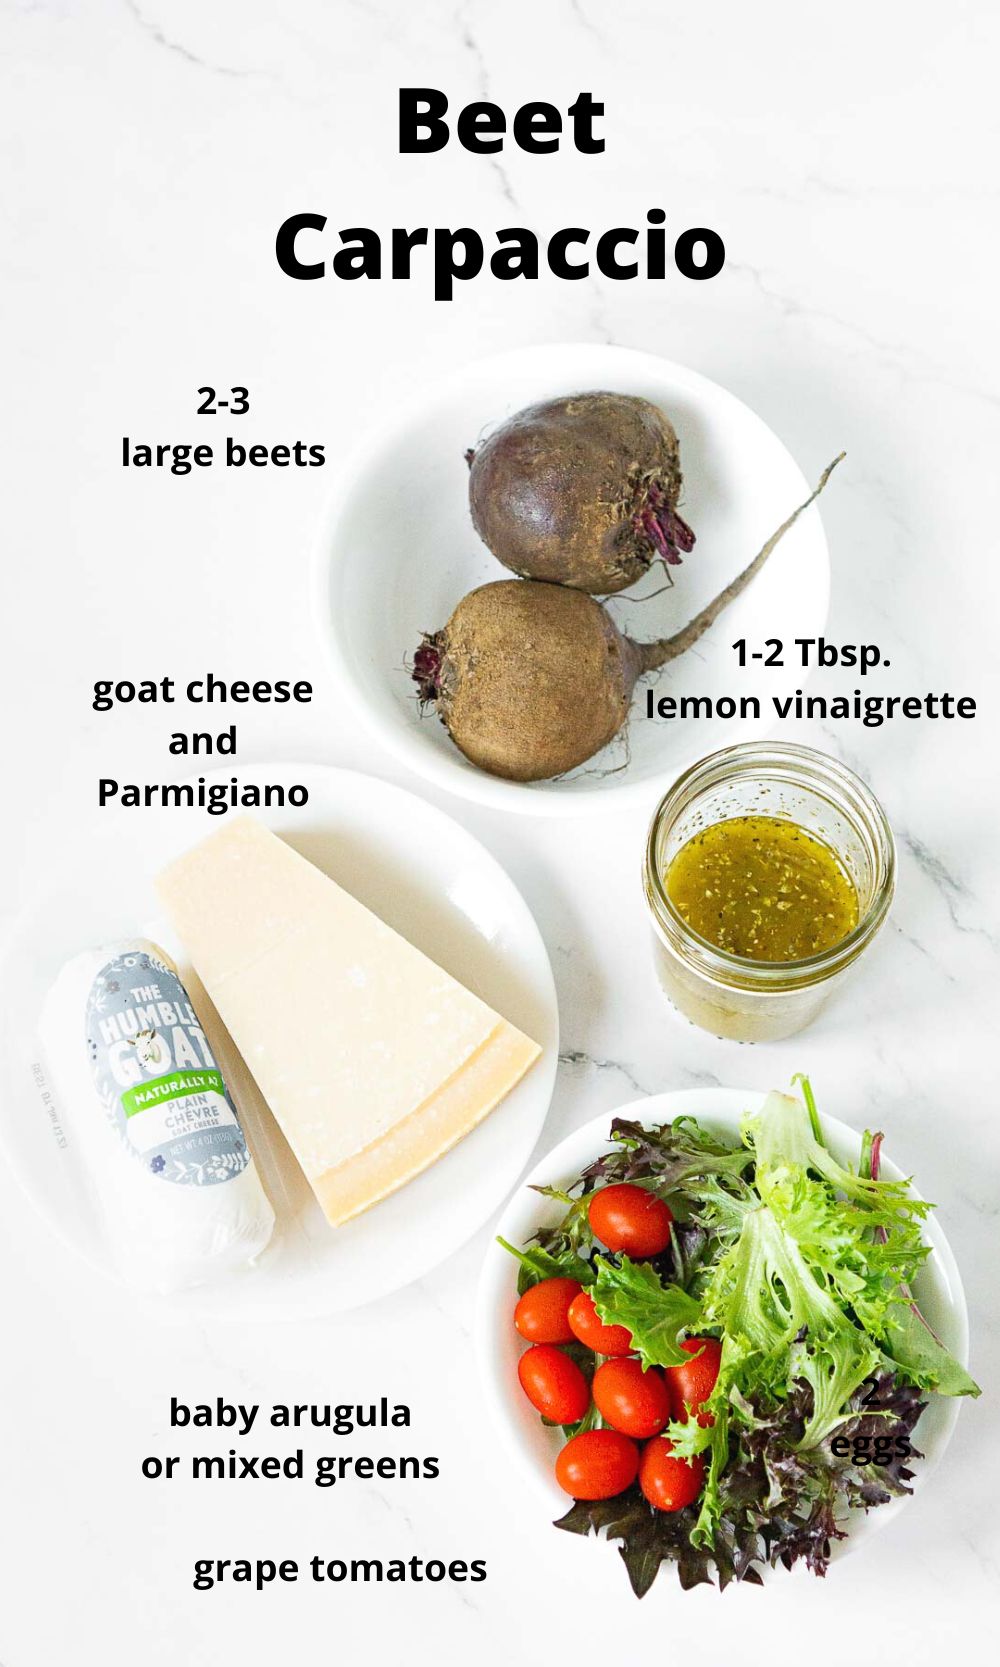 Ingredients for Beet Carpaccio